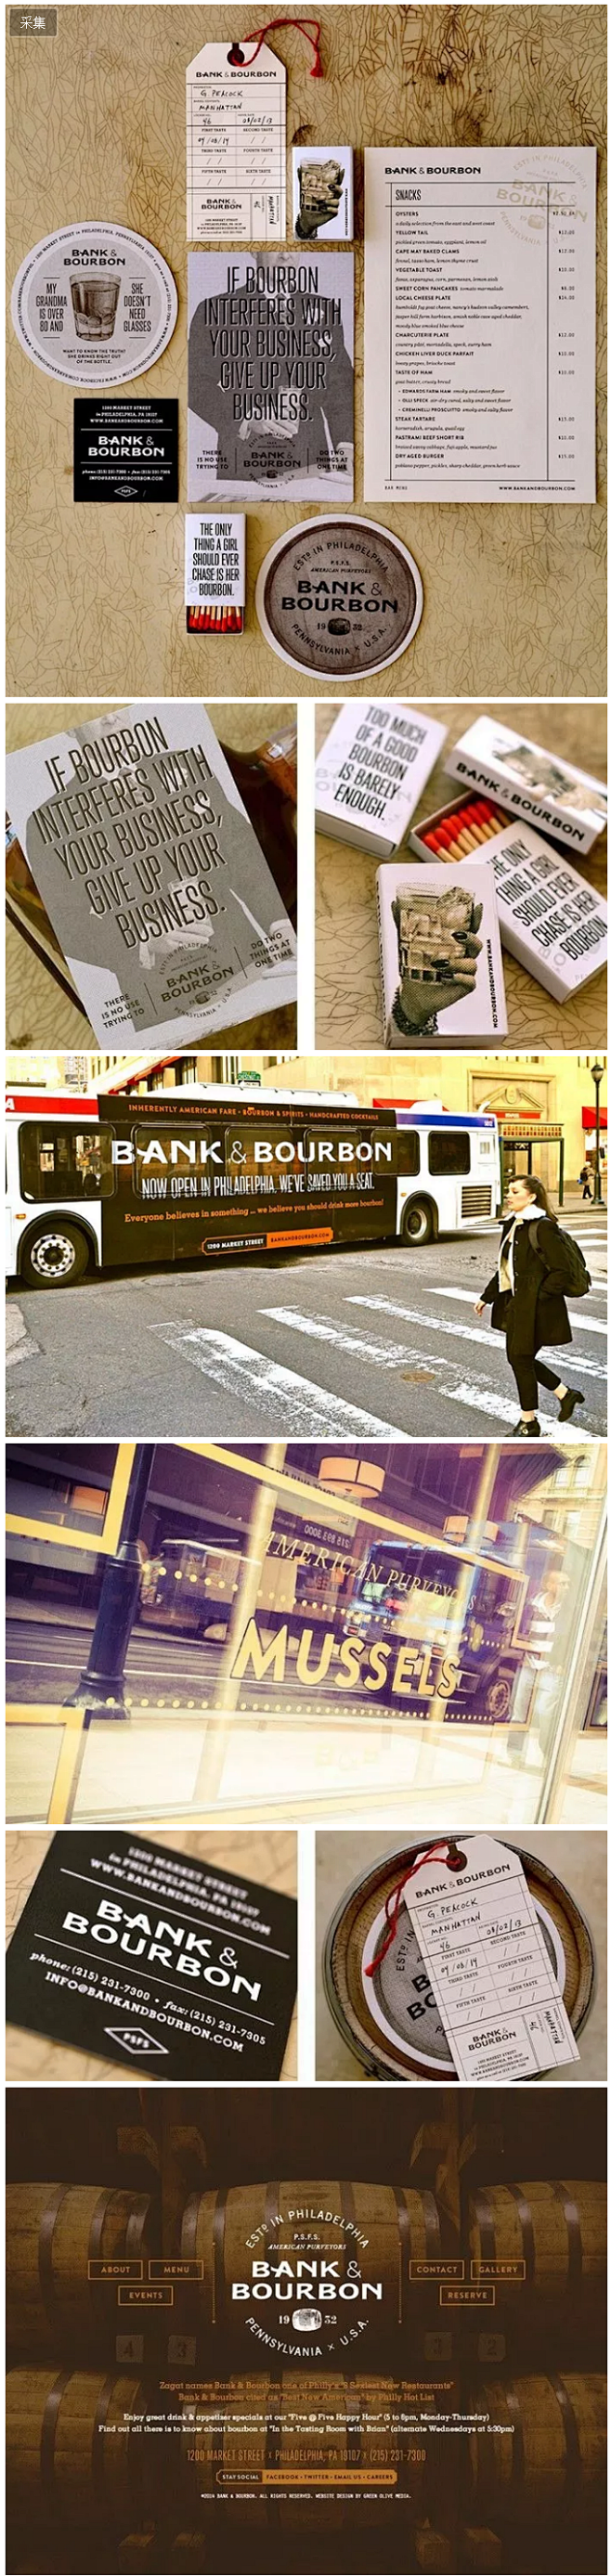 【费城Bank & Bourbon餐饮品...